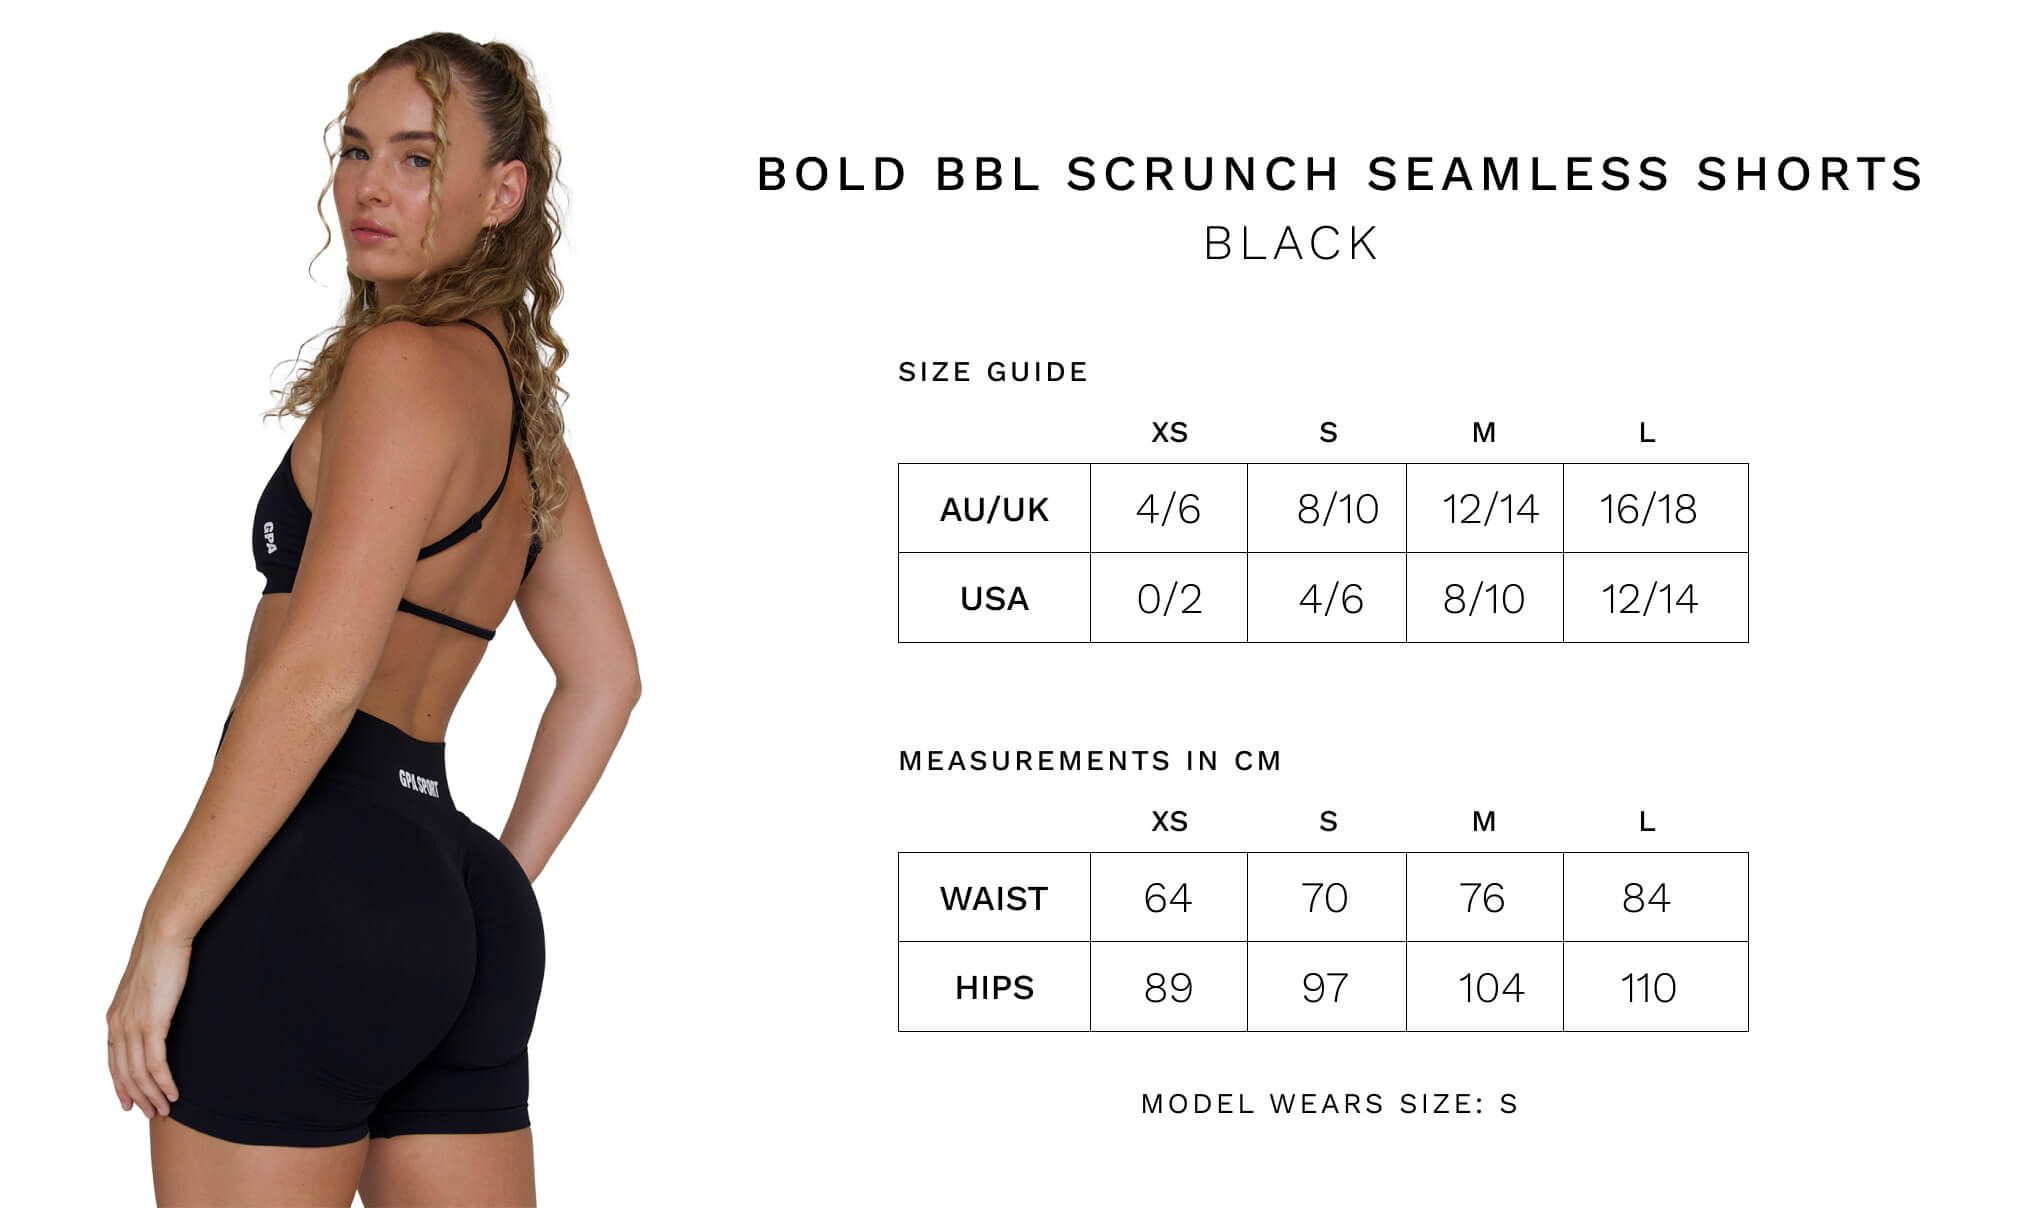 BOLD BBL SCRUNCH SEAMLESS SHORTS - BLACK